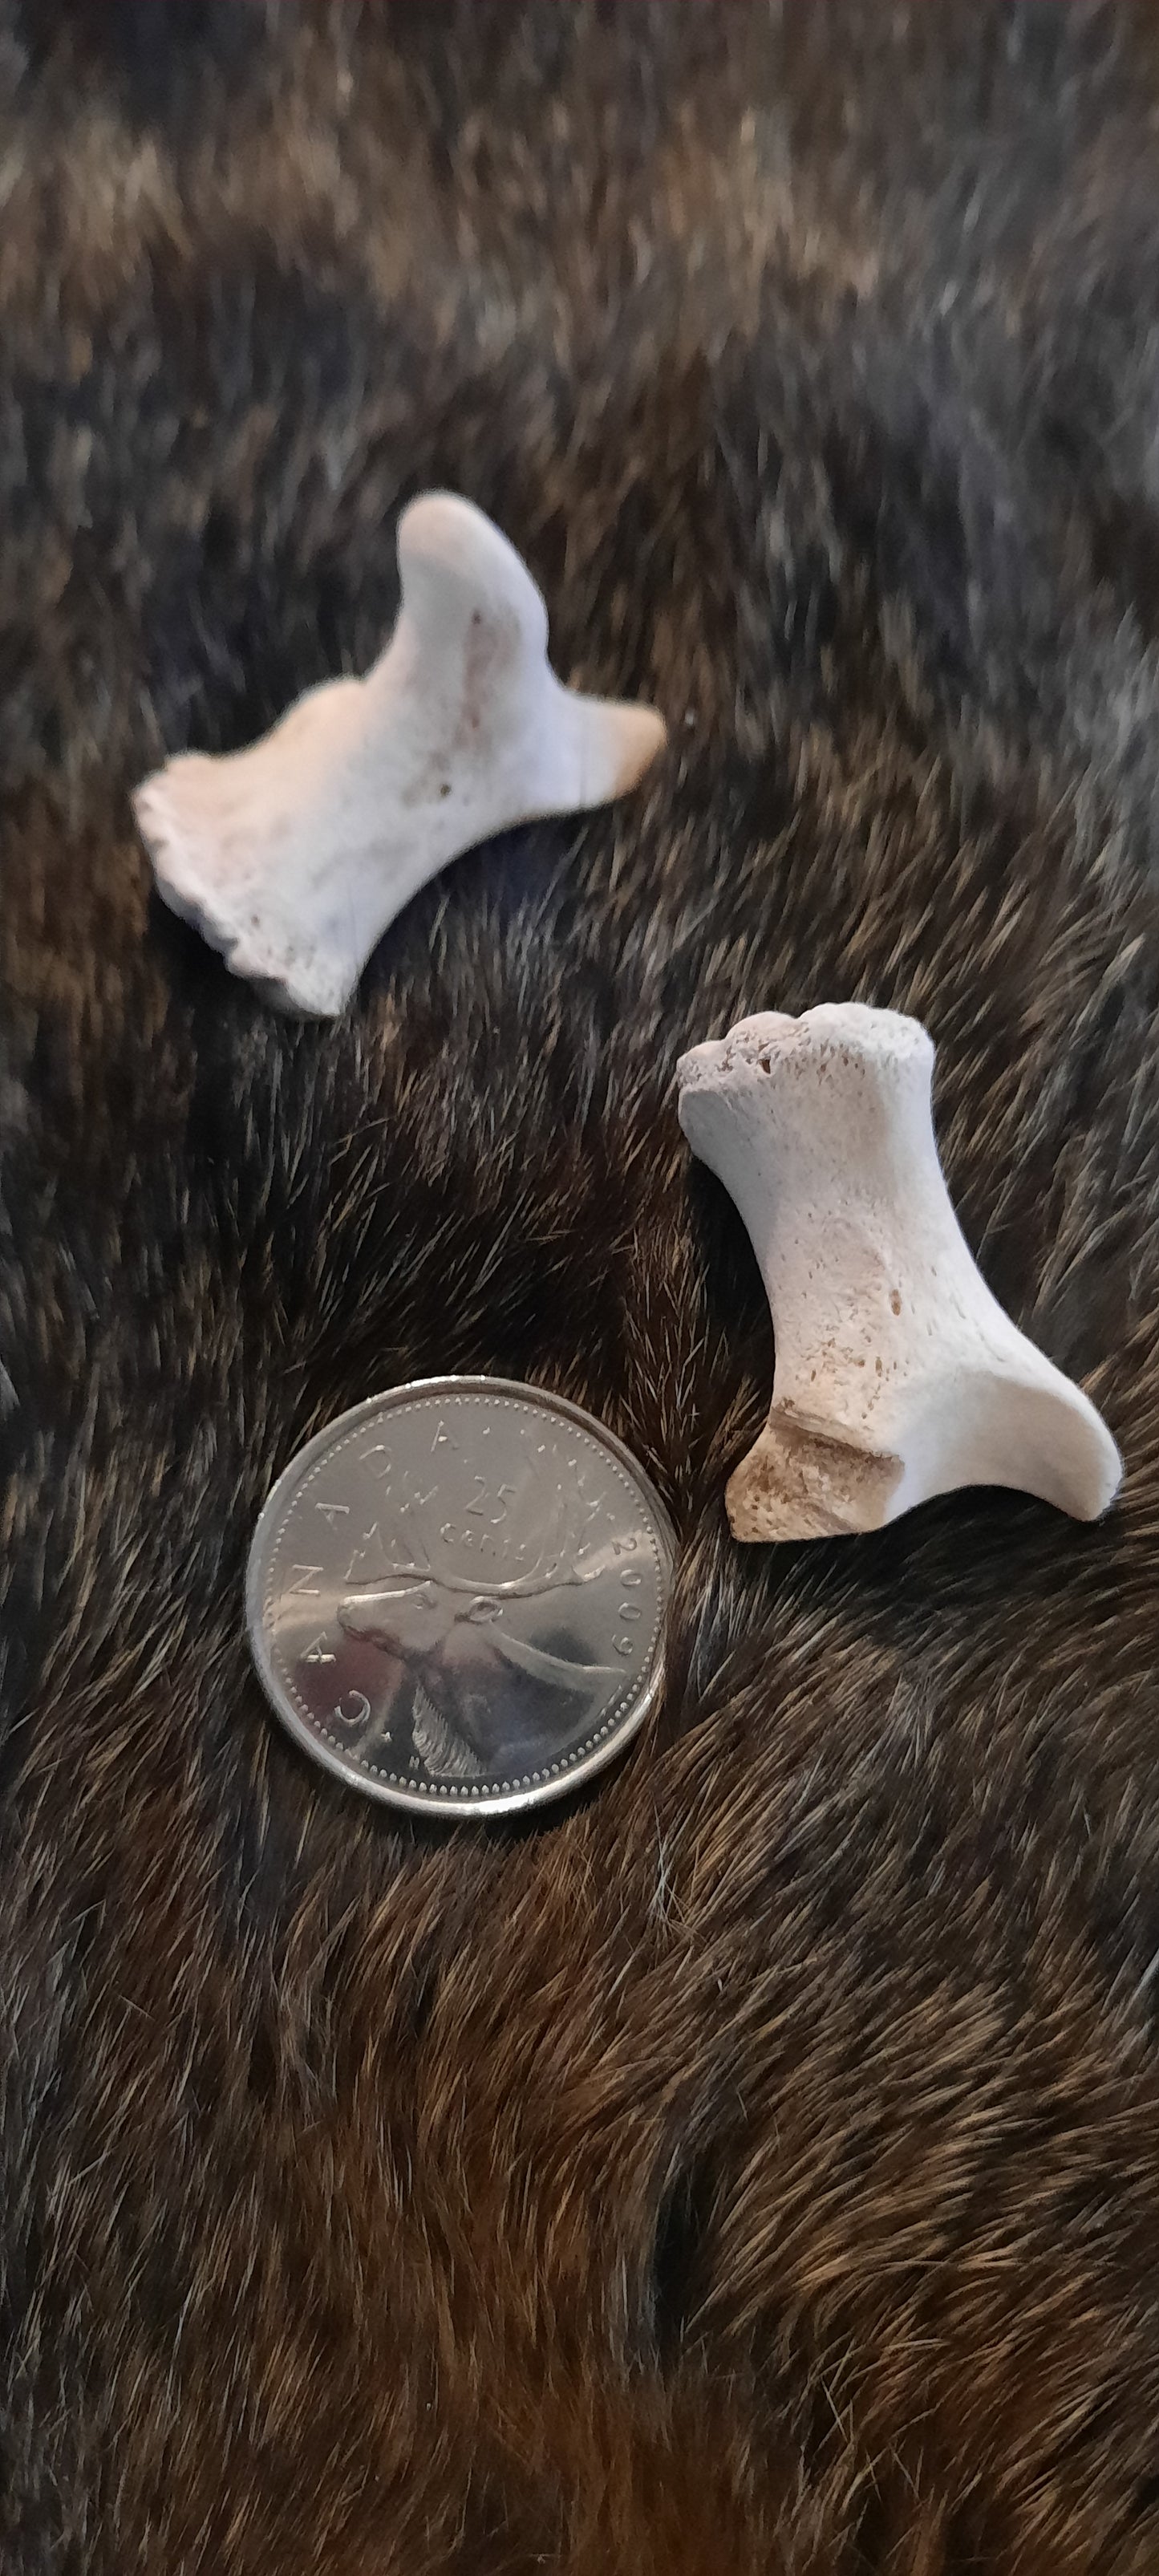 Bear Bone - Astragalus Ankle Bone